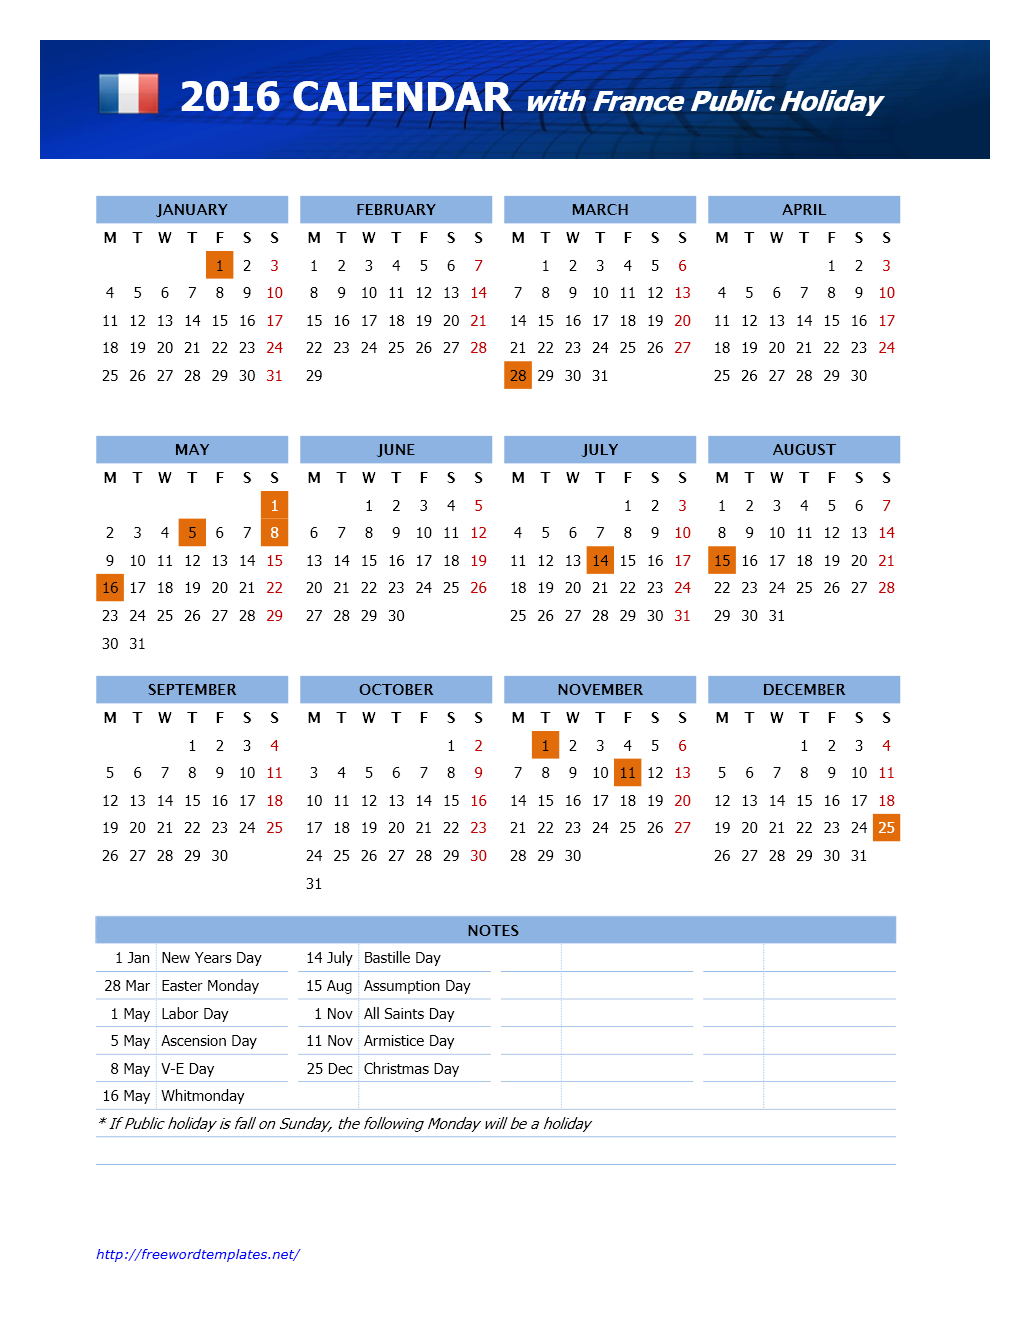 2016 France Public Holidays Calendar Template for Word